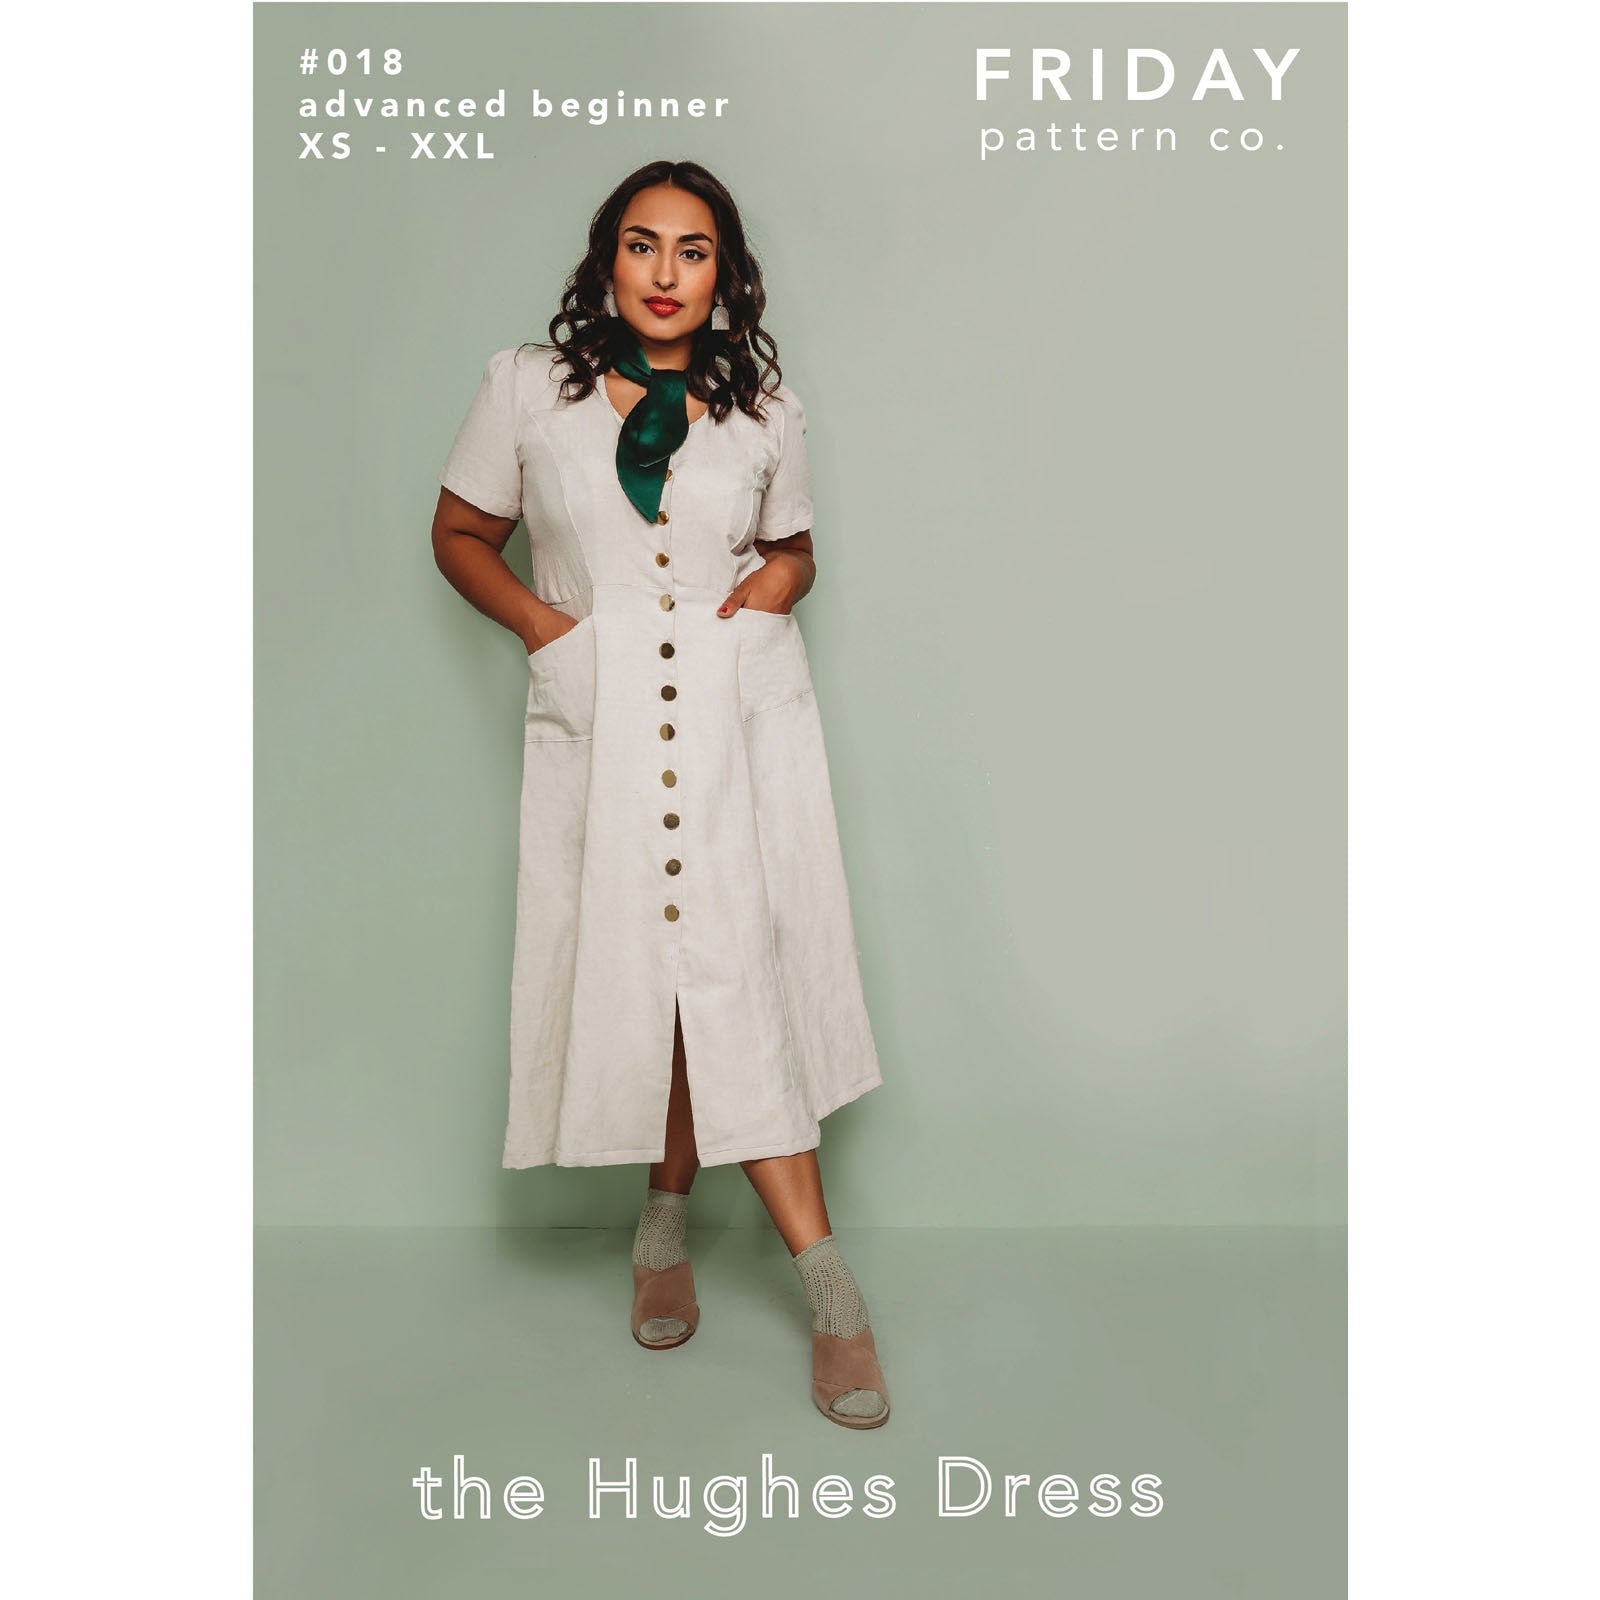 The Hughes Dress